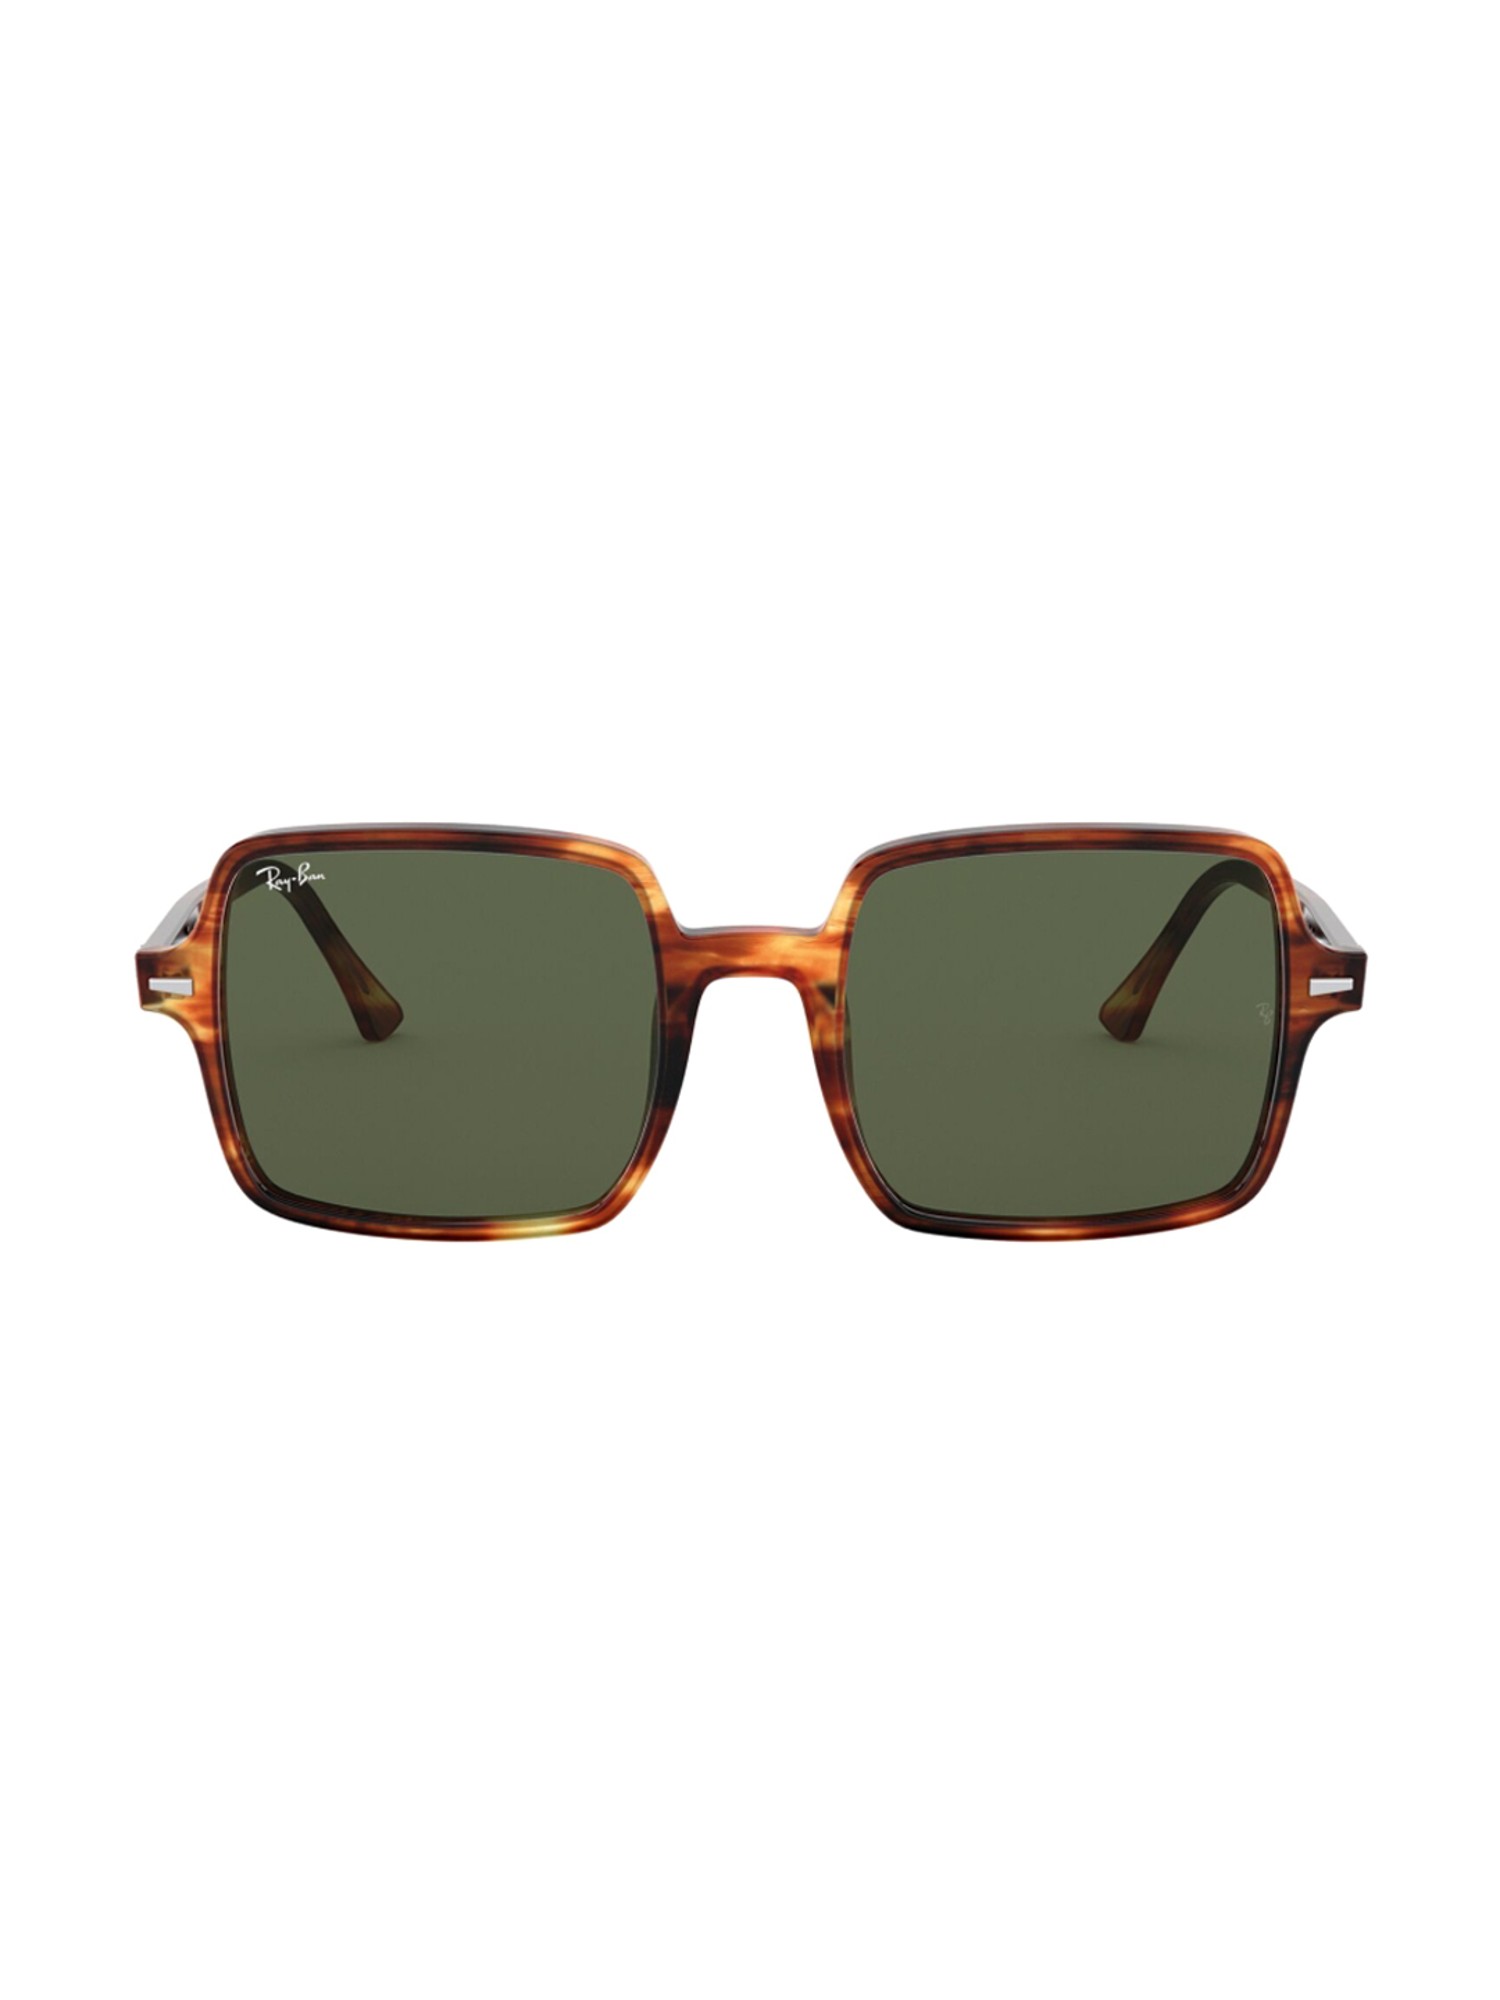 Shop Ray Ban Sunglasses | Smart Glasses | Very Ireland